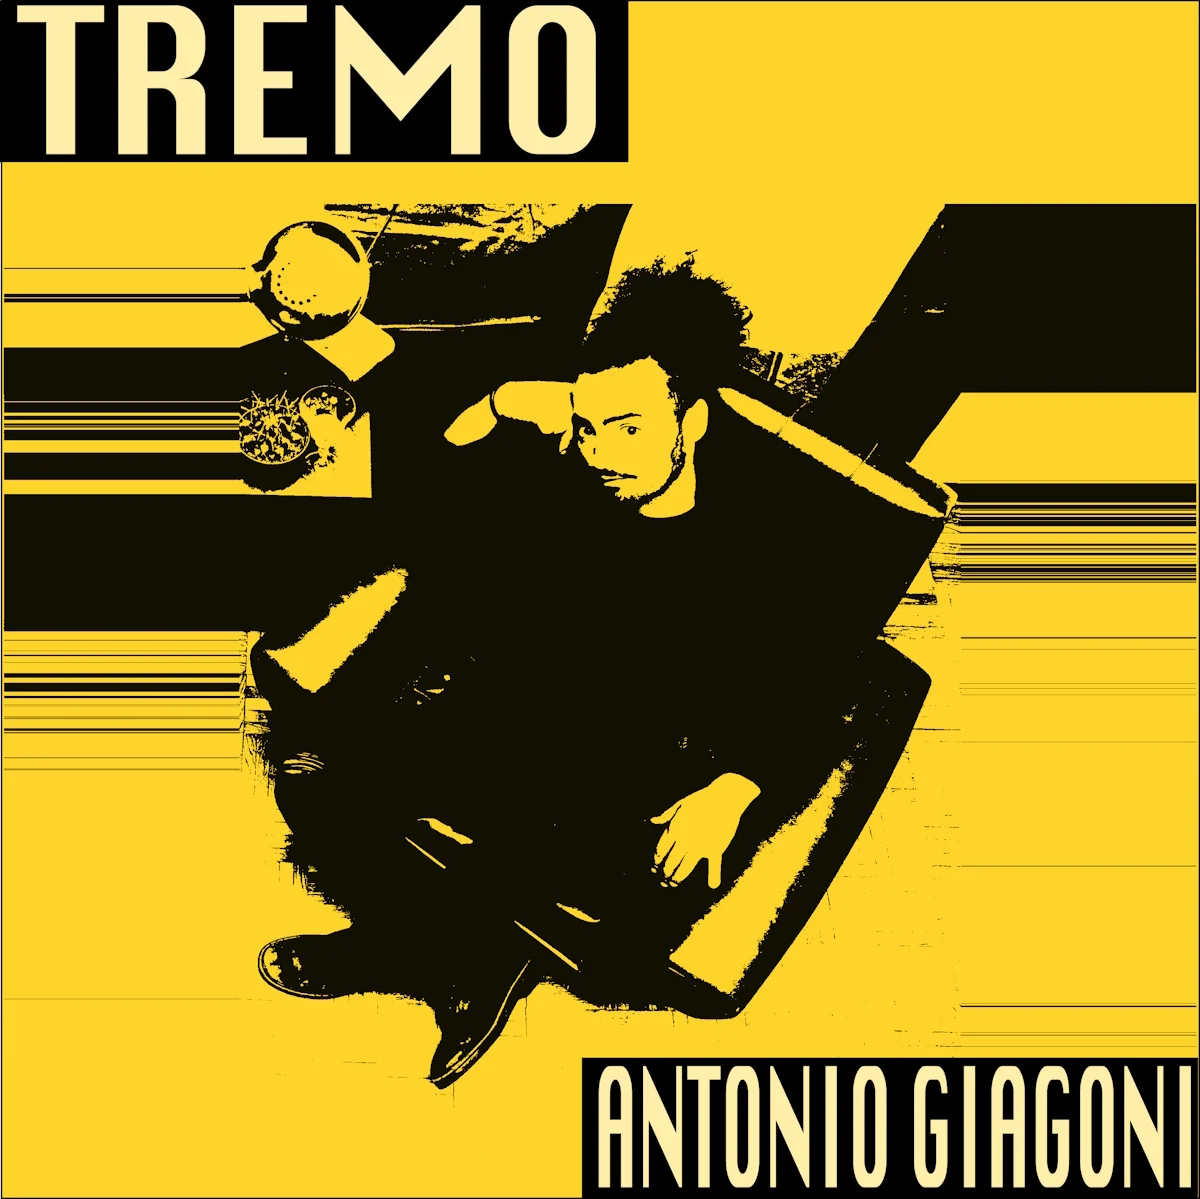 <strong>ANTONIO GIAGONI</strong>